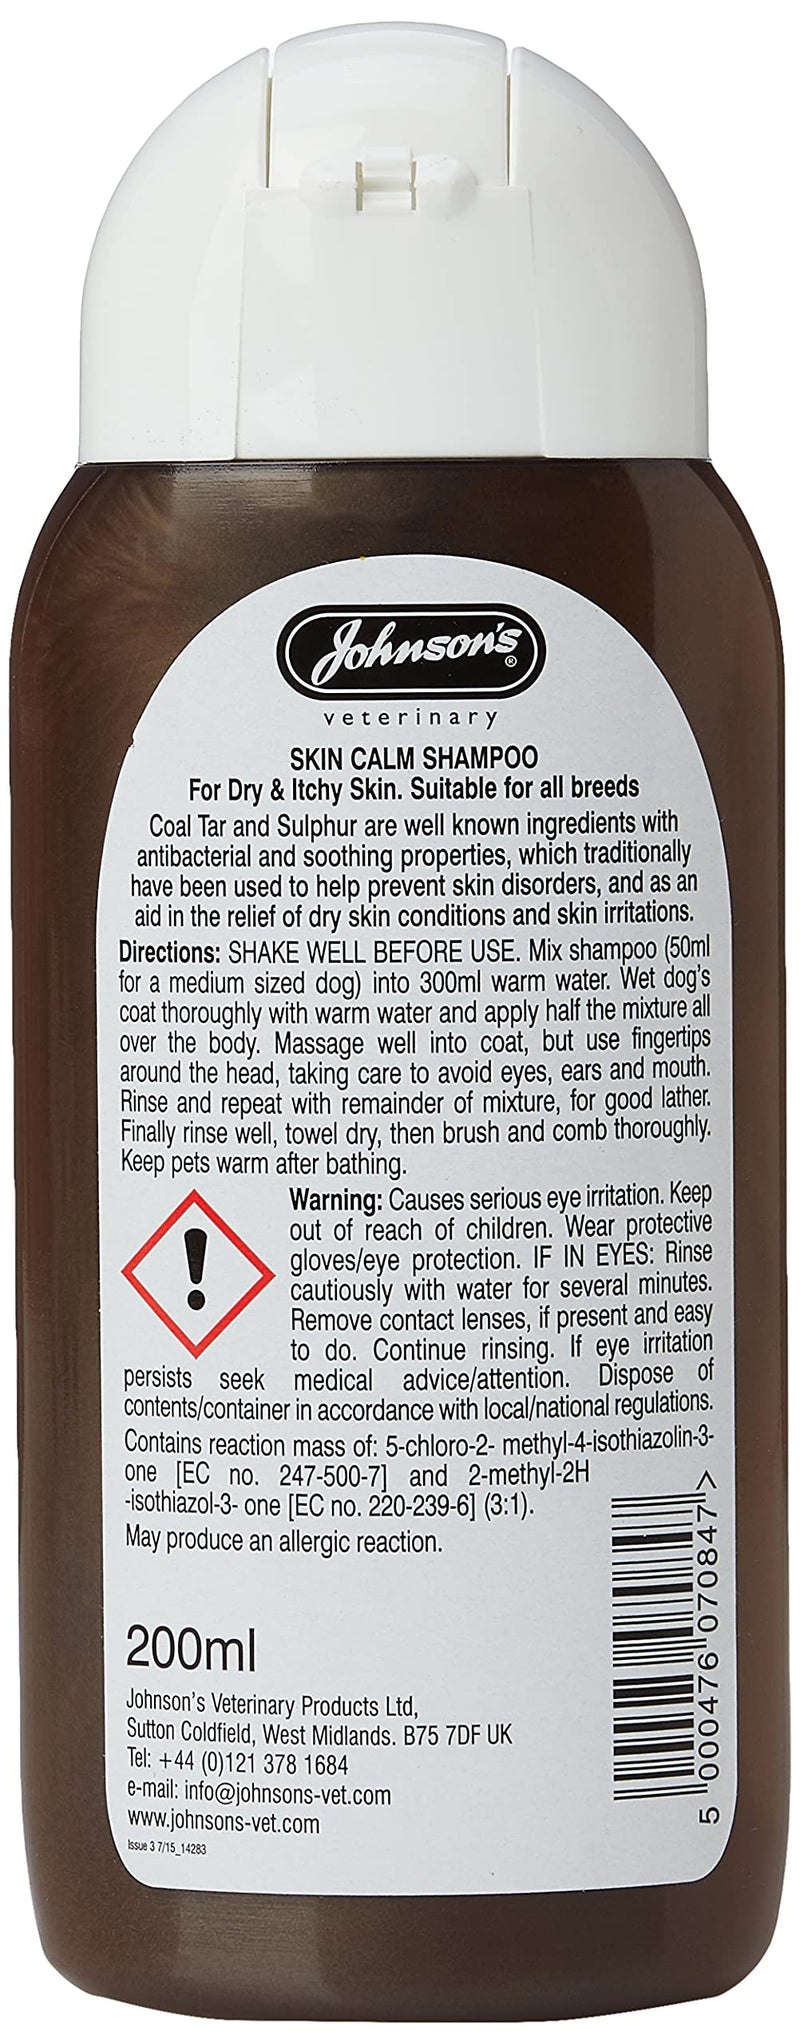 Johnsons Skin Calm Dog shampoo 200ml for dry and itchy skin - PawsPlanet Australia